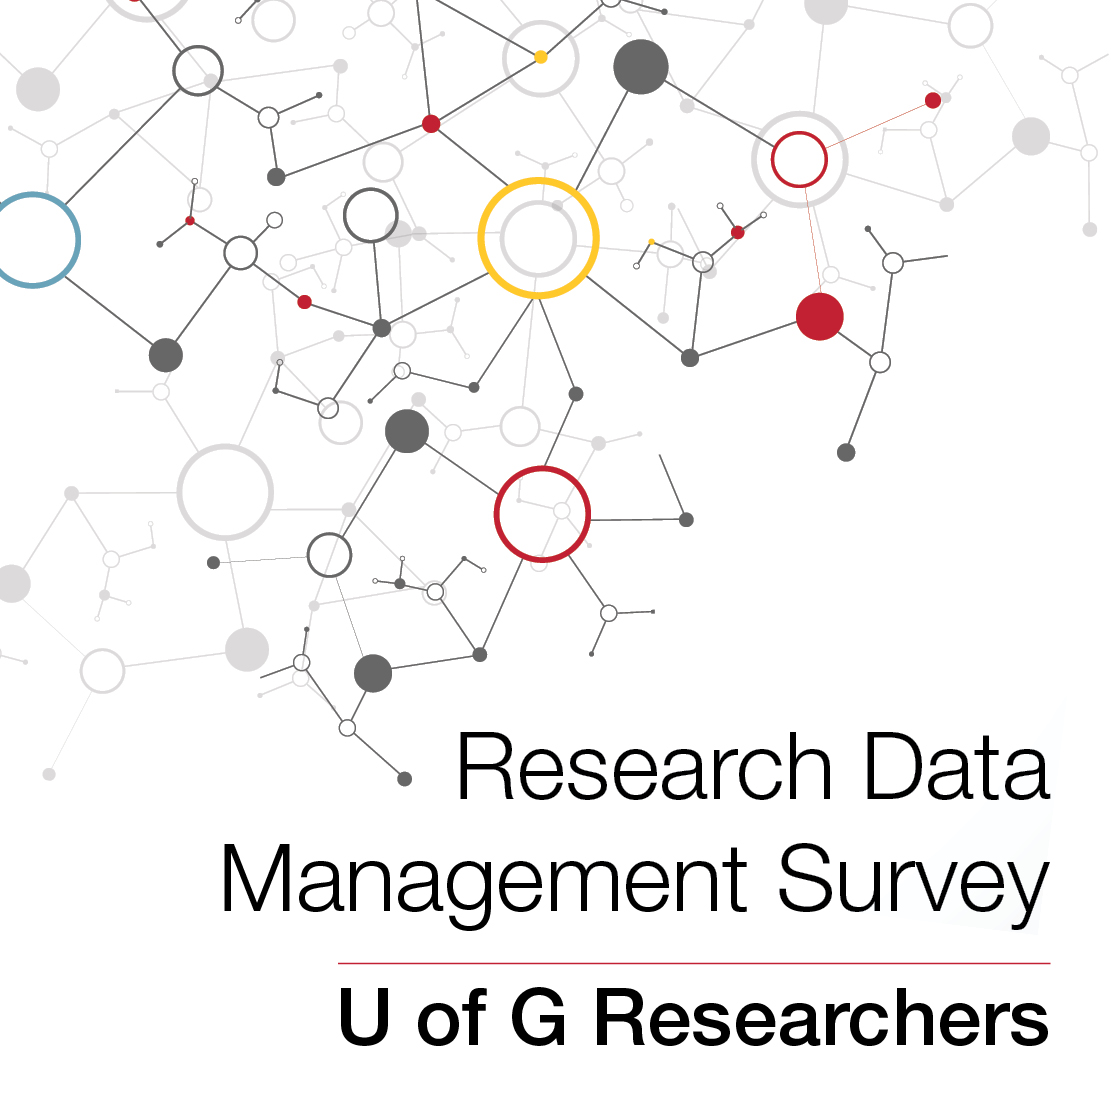 Research Data Management Survey: U of G Researchers